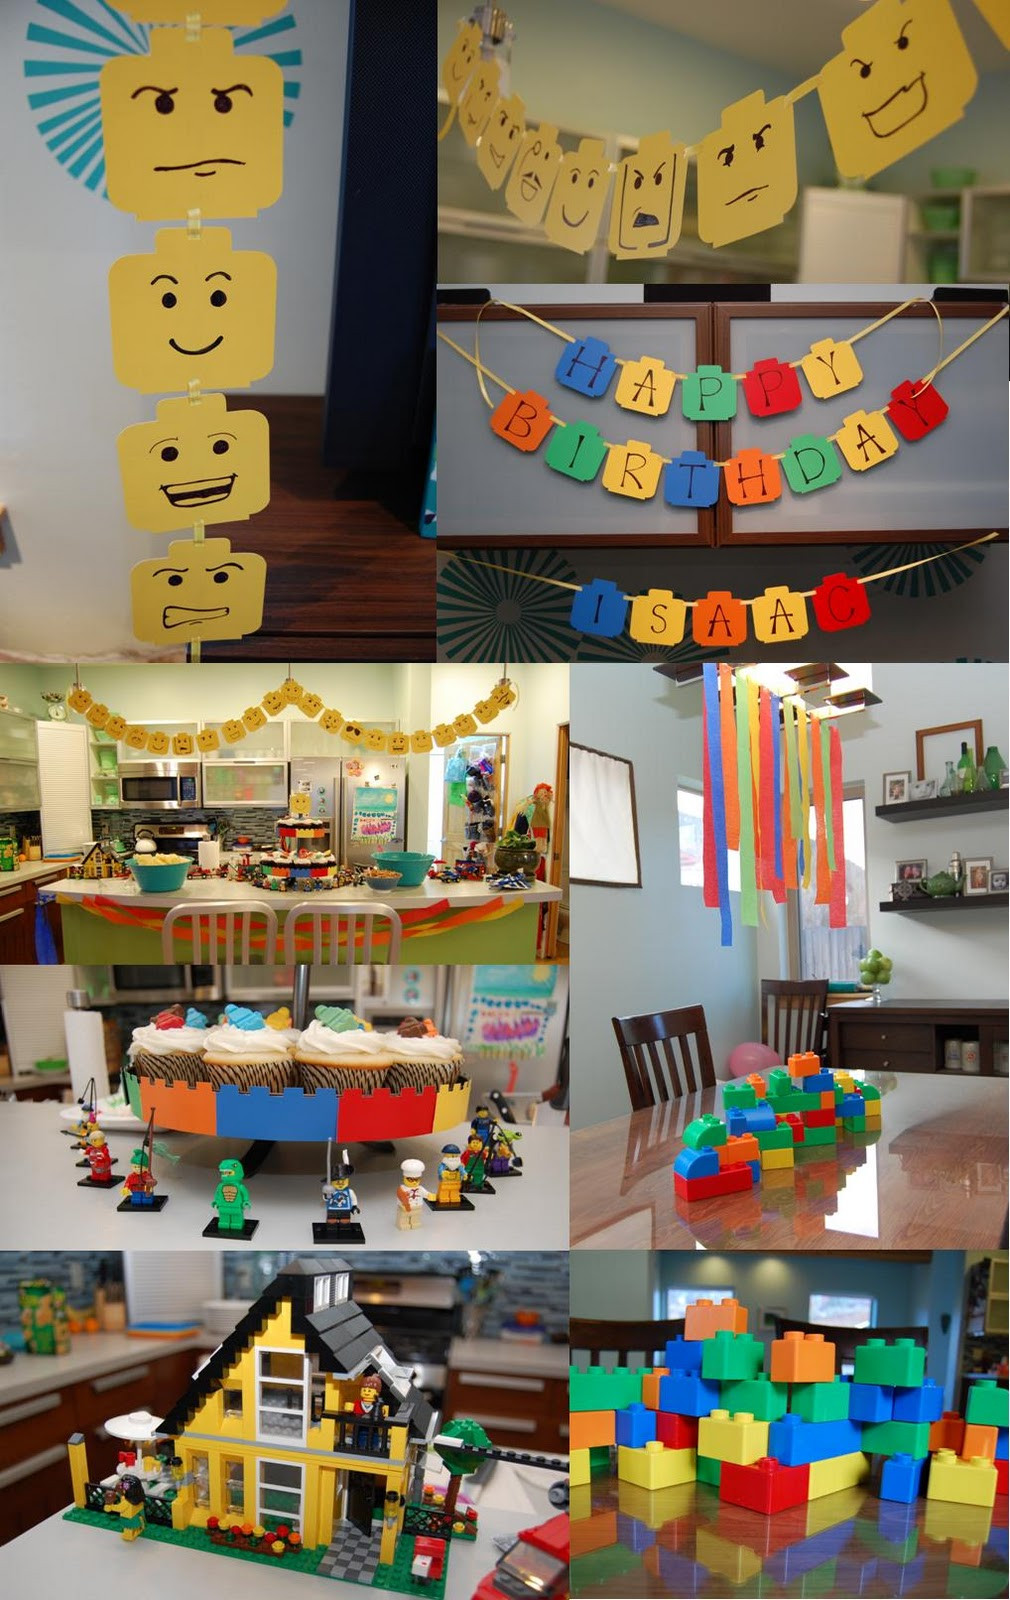 Legos Birthday Party Ideas
 "C" is for Crafty Lego Birthday Party